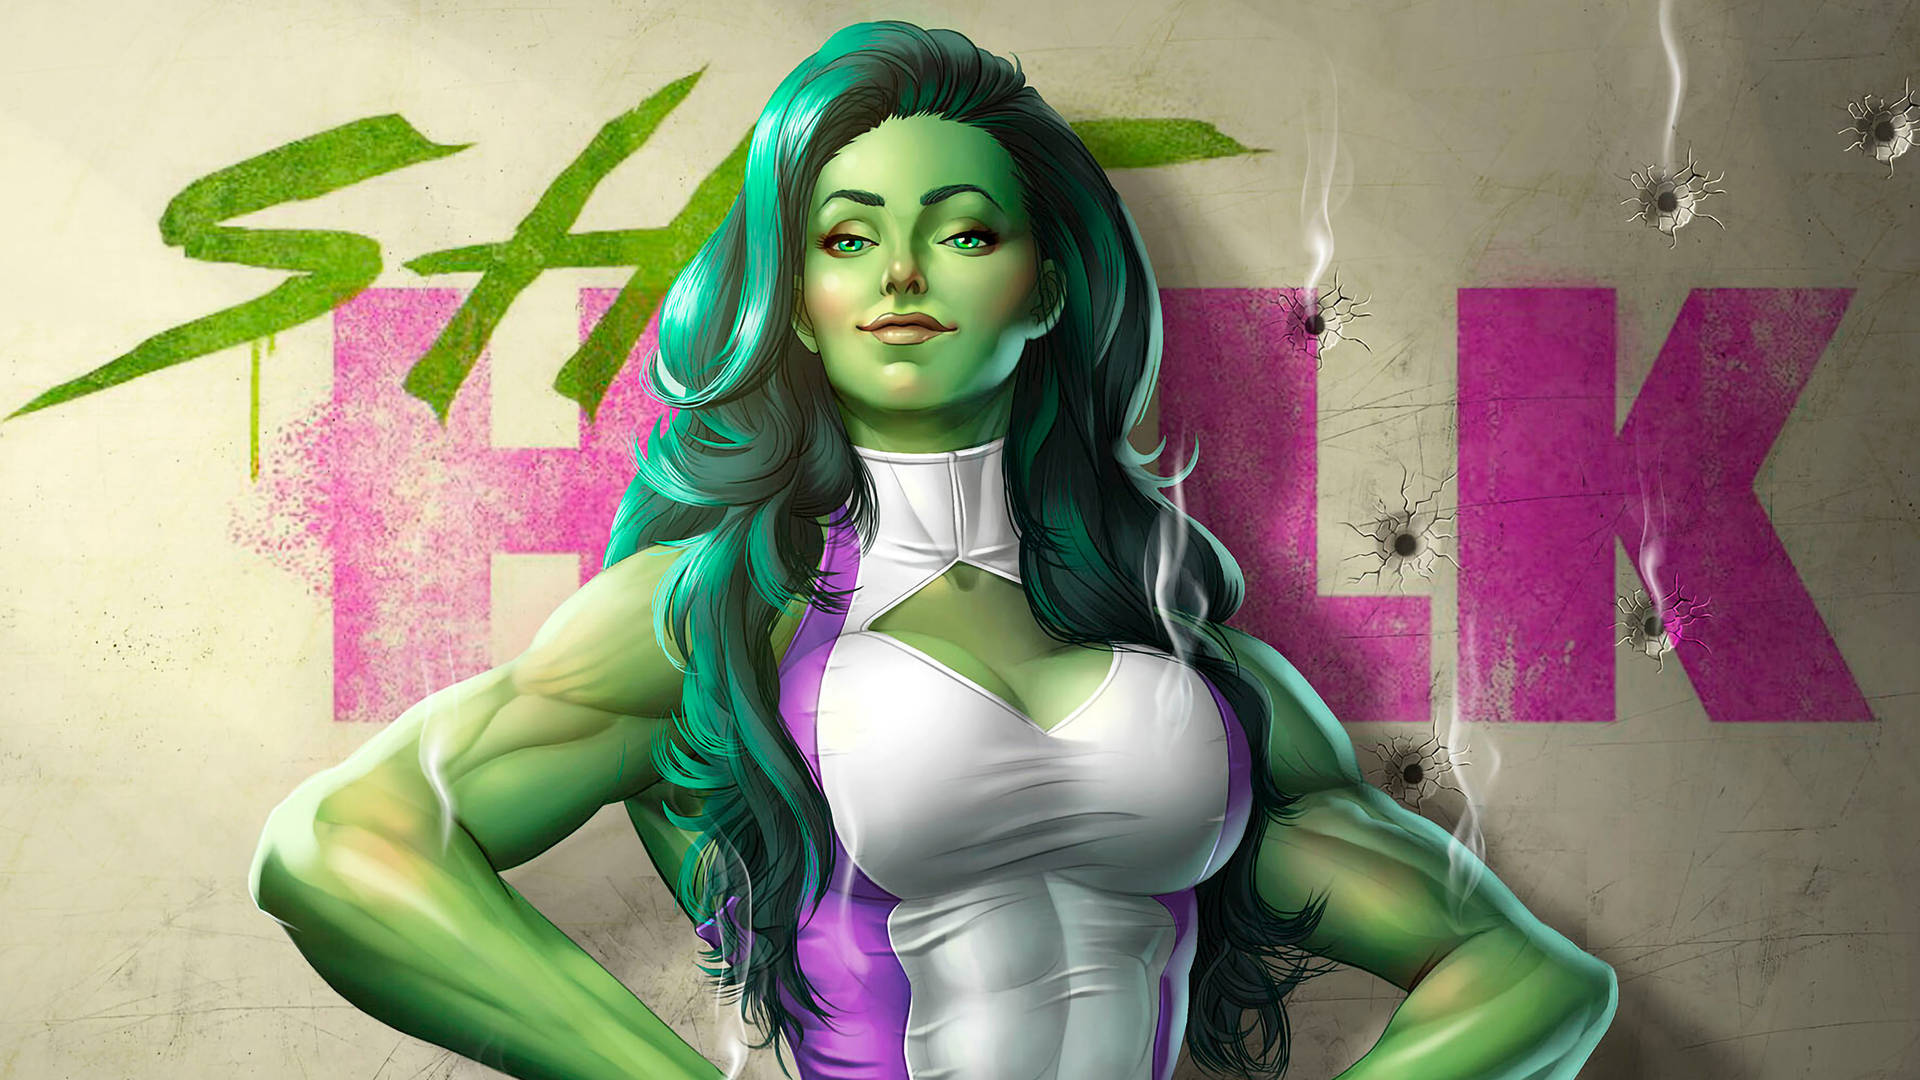 Free She Hulk Wallpaper Downloads, [100+] She Hulk Wallpapers for FREE |  